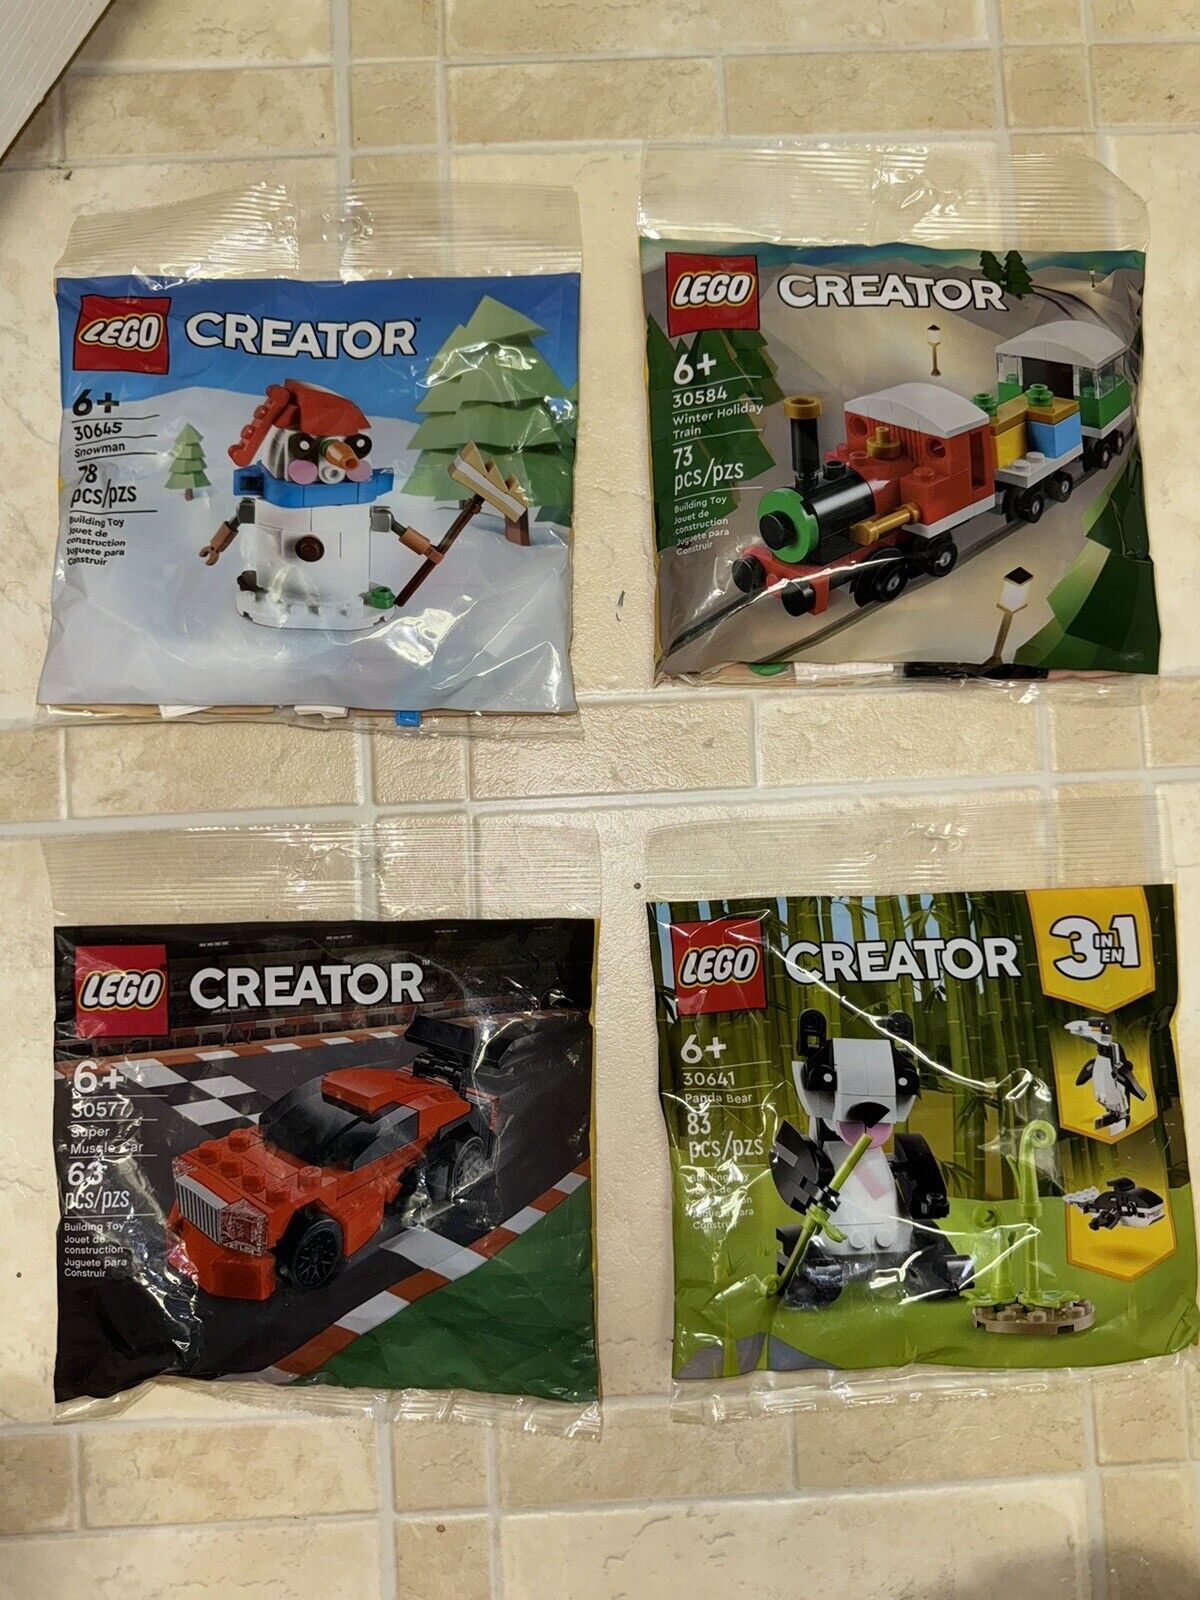 x4 LEGO Creator Polybags 30645 Snowman 30584 Winter Train 30577 Muscle Car 30641